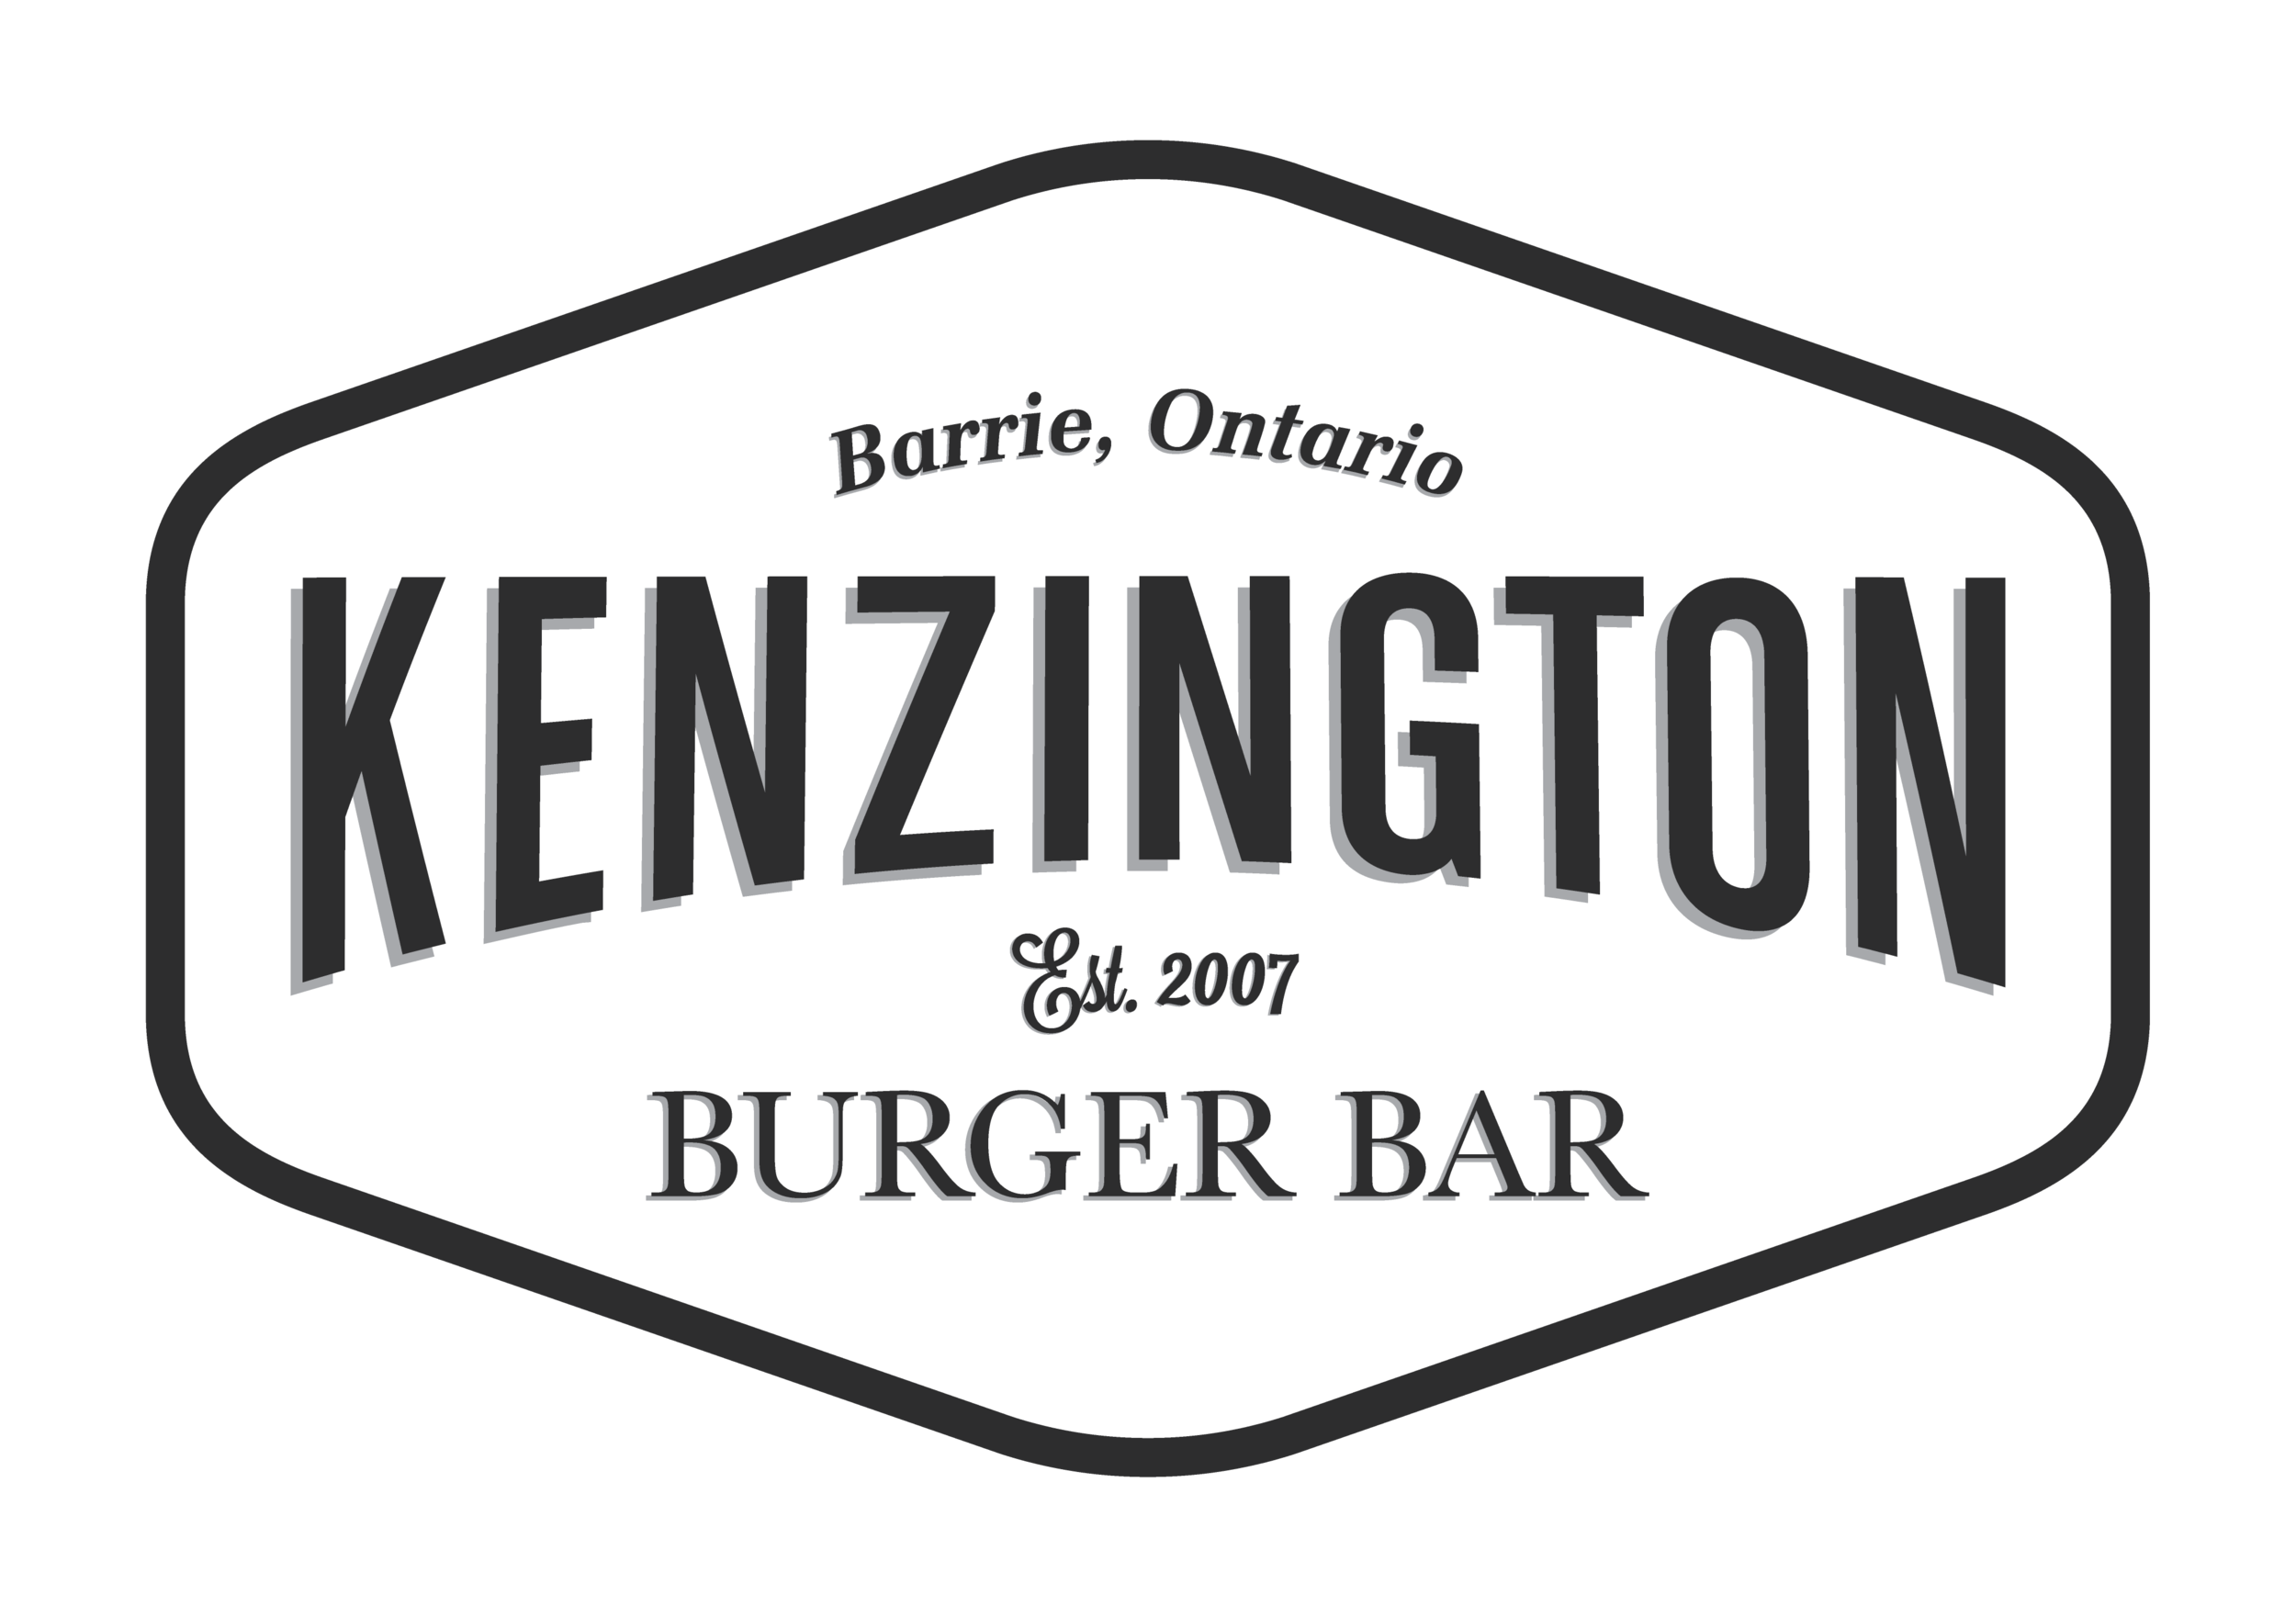 Kenzington_LG_Black_Master_BurgerBar.png